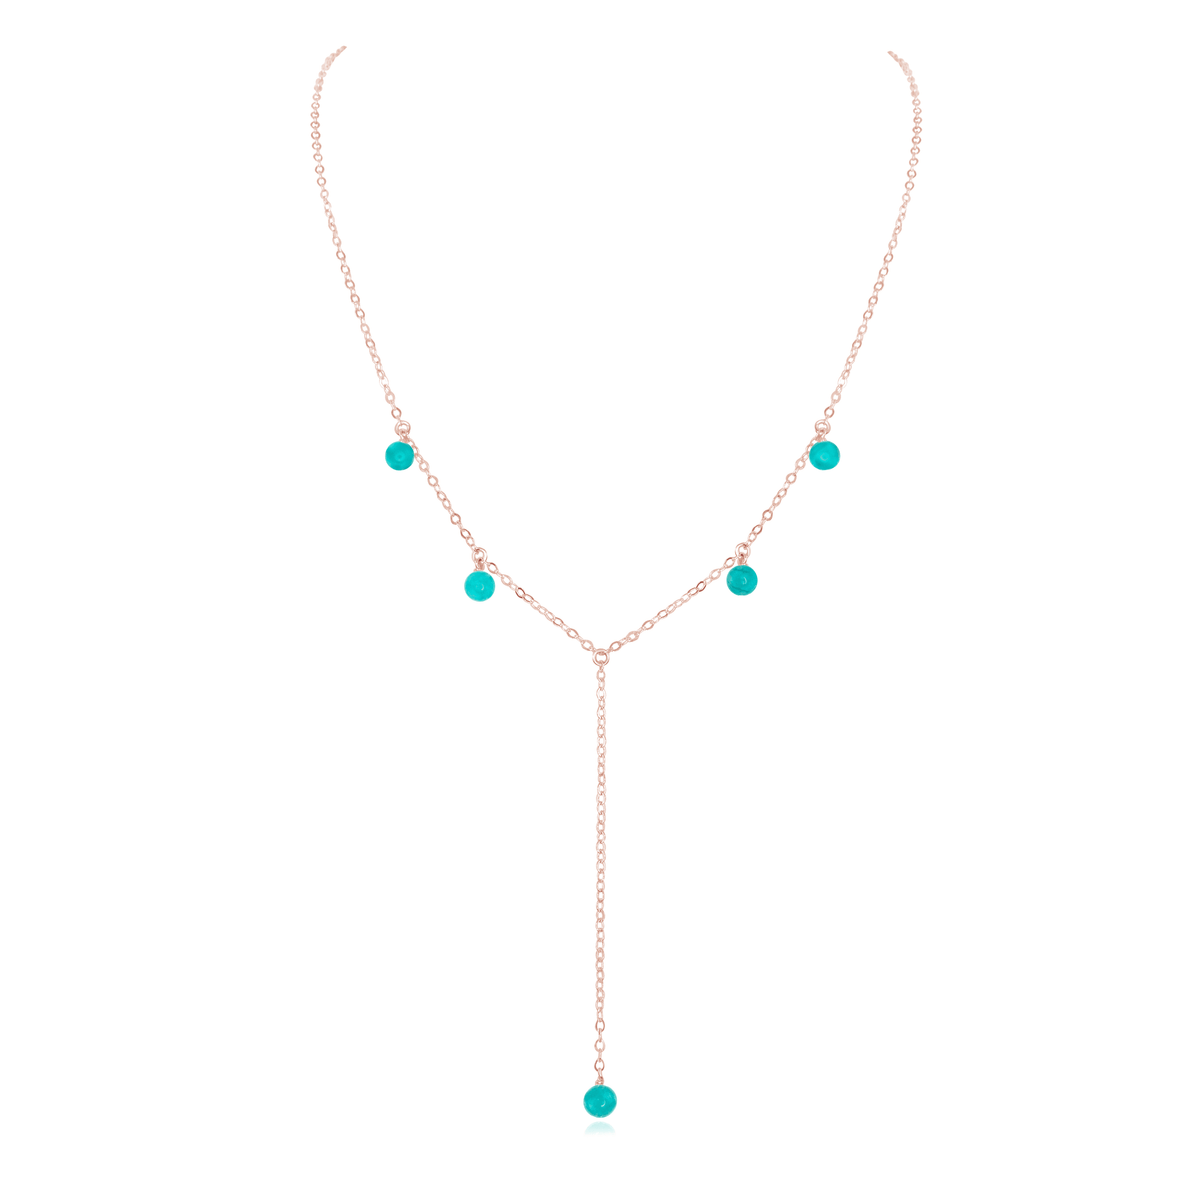 Turquoise Boho Lariat Necklace - Turquoise Boho Lariat Necklace - 14k Rose Gold Fill - Luna Tide Handmade Crystal Jewellery